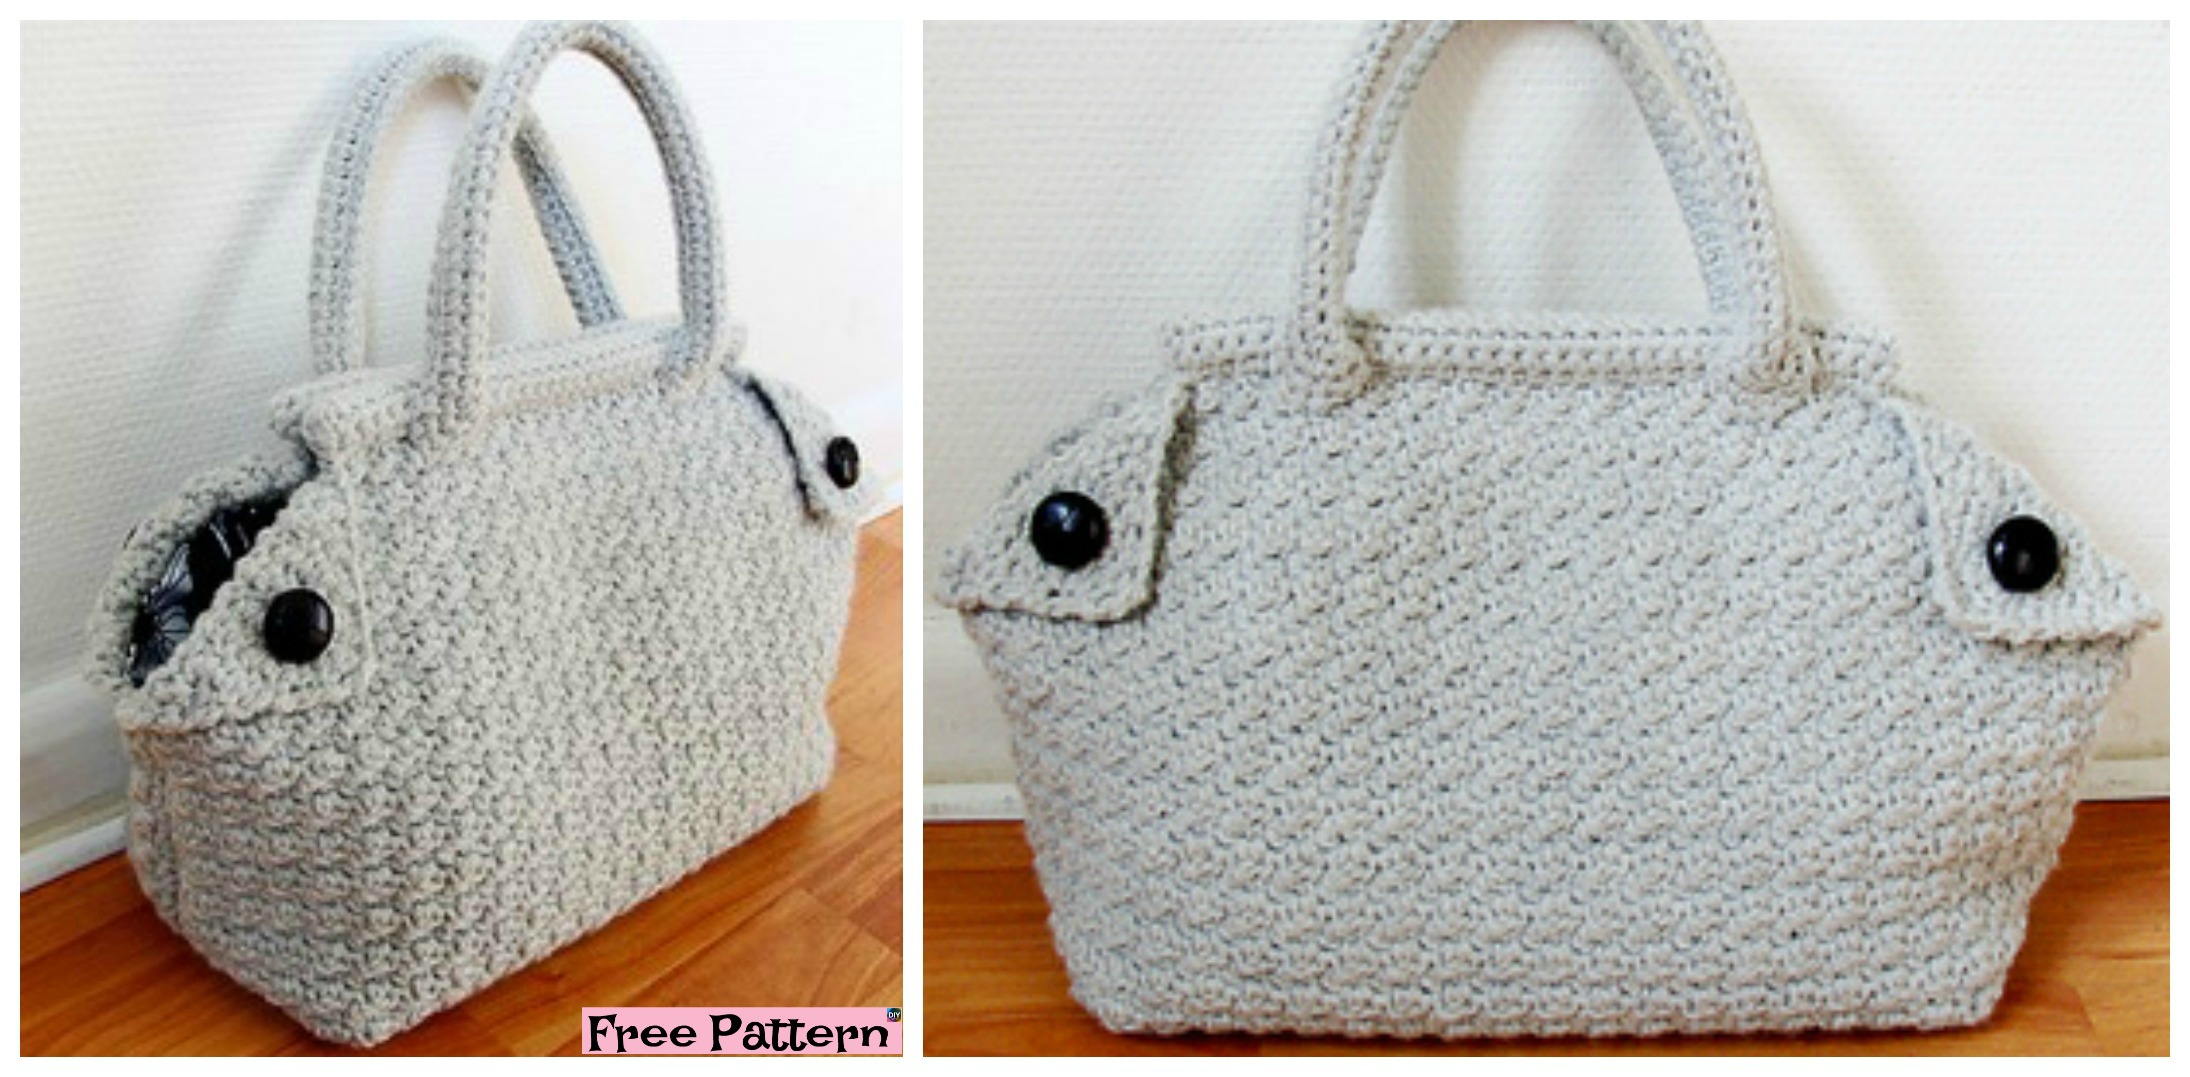 Classic Crochet Derek Bag — Free Pattern